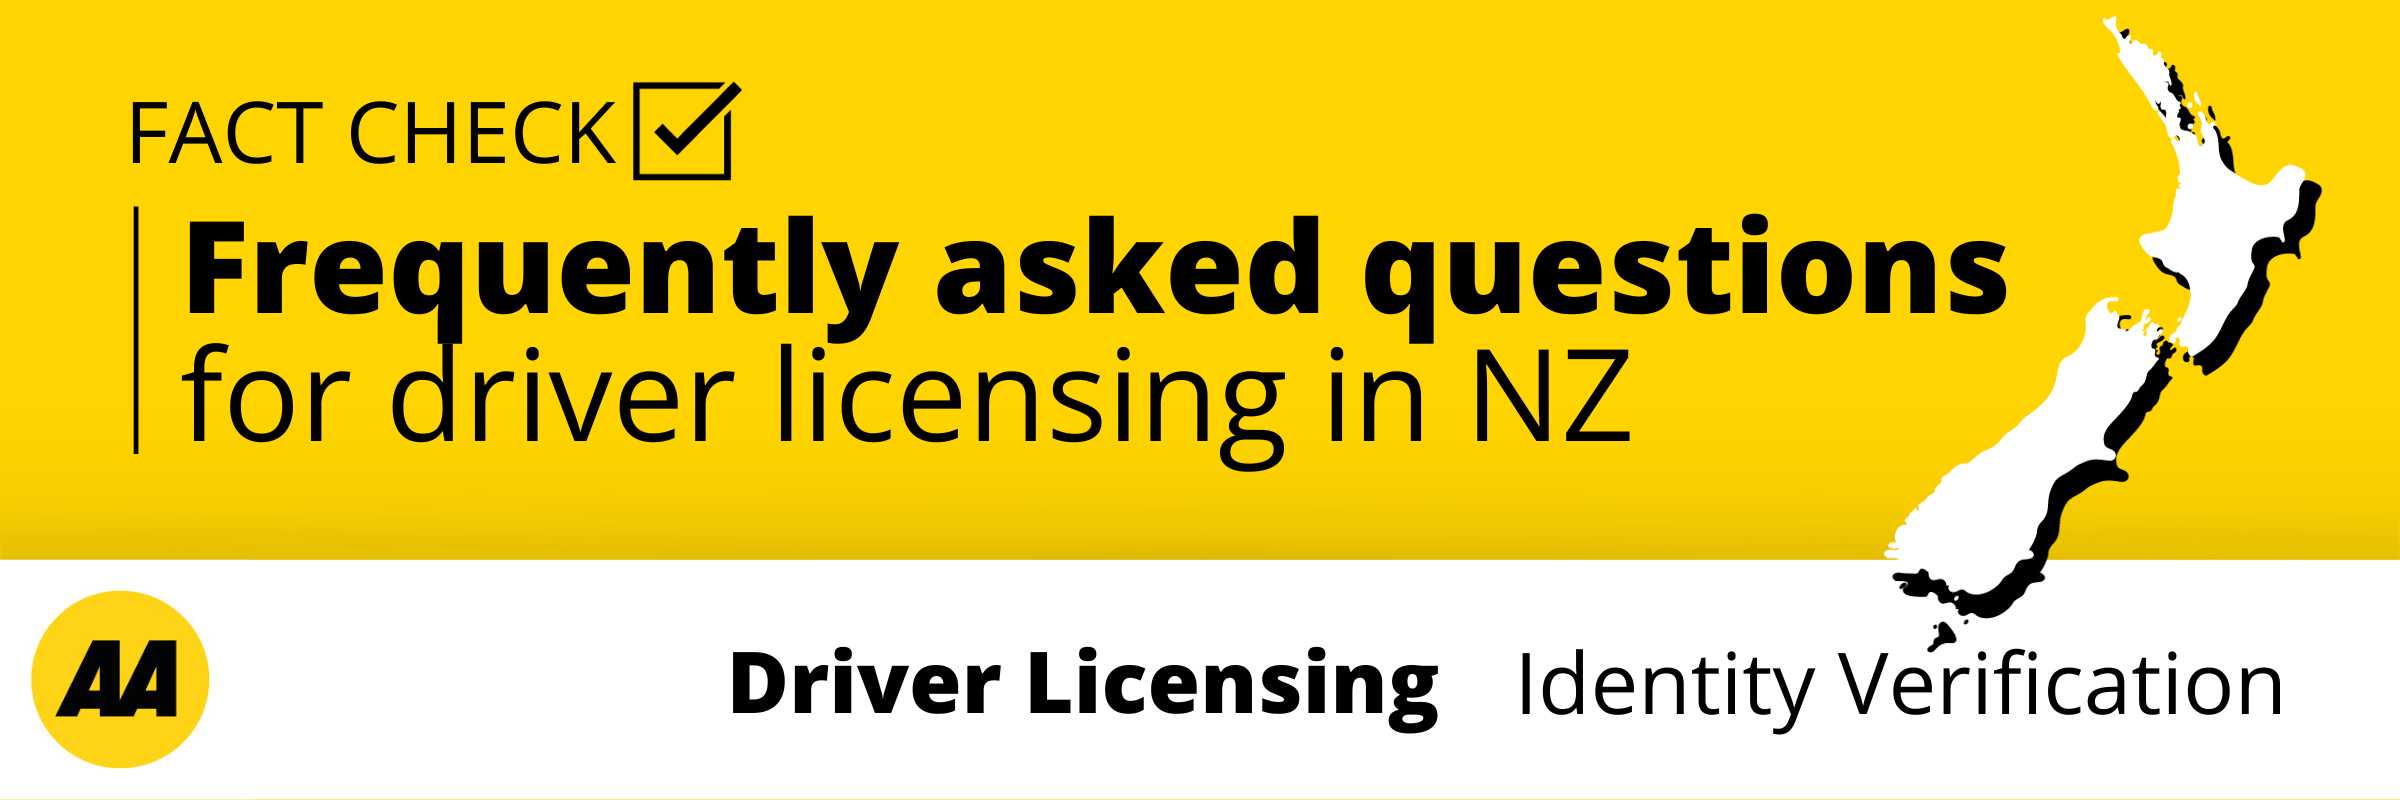 Fact check Driver licensing FAQ